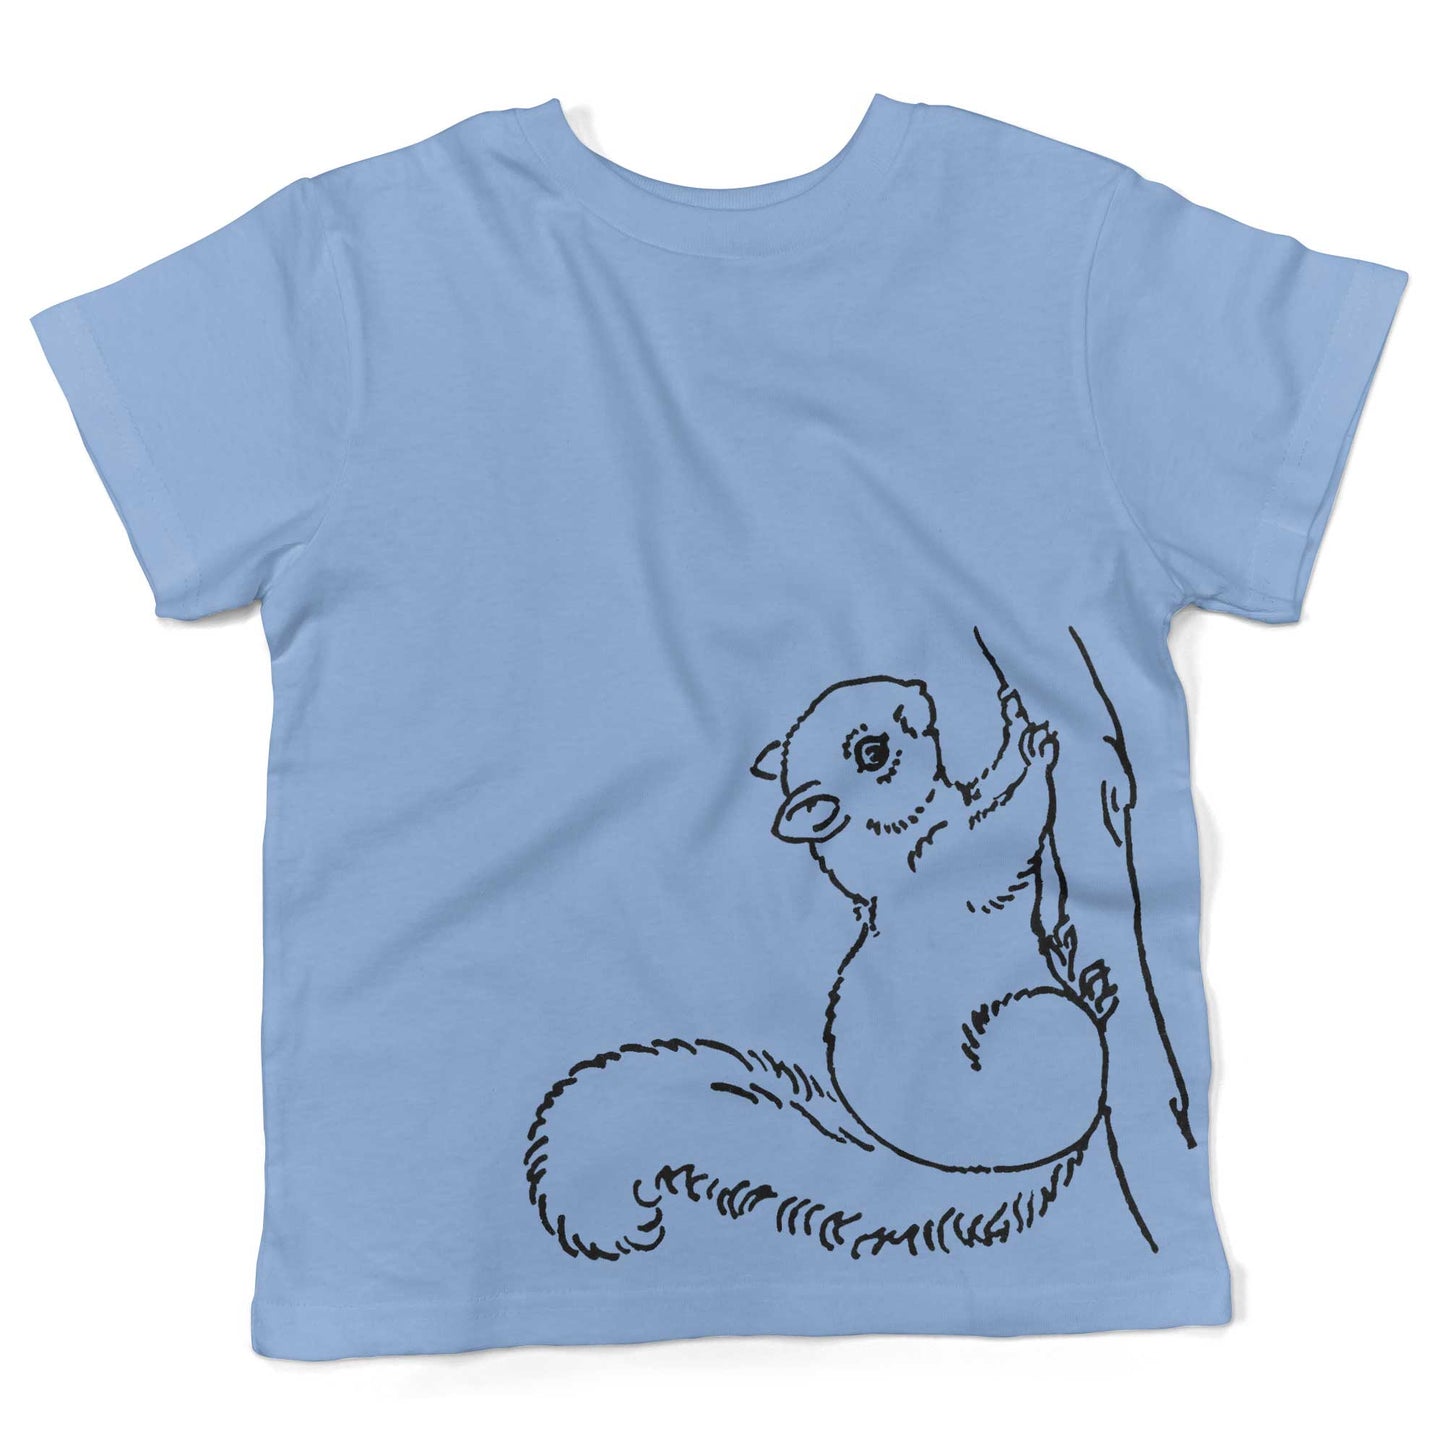 Super Cute Squirrel Toddler Shirt-Organic Baby Blue-2T